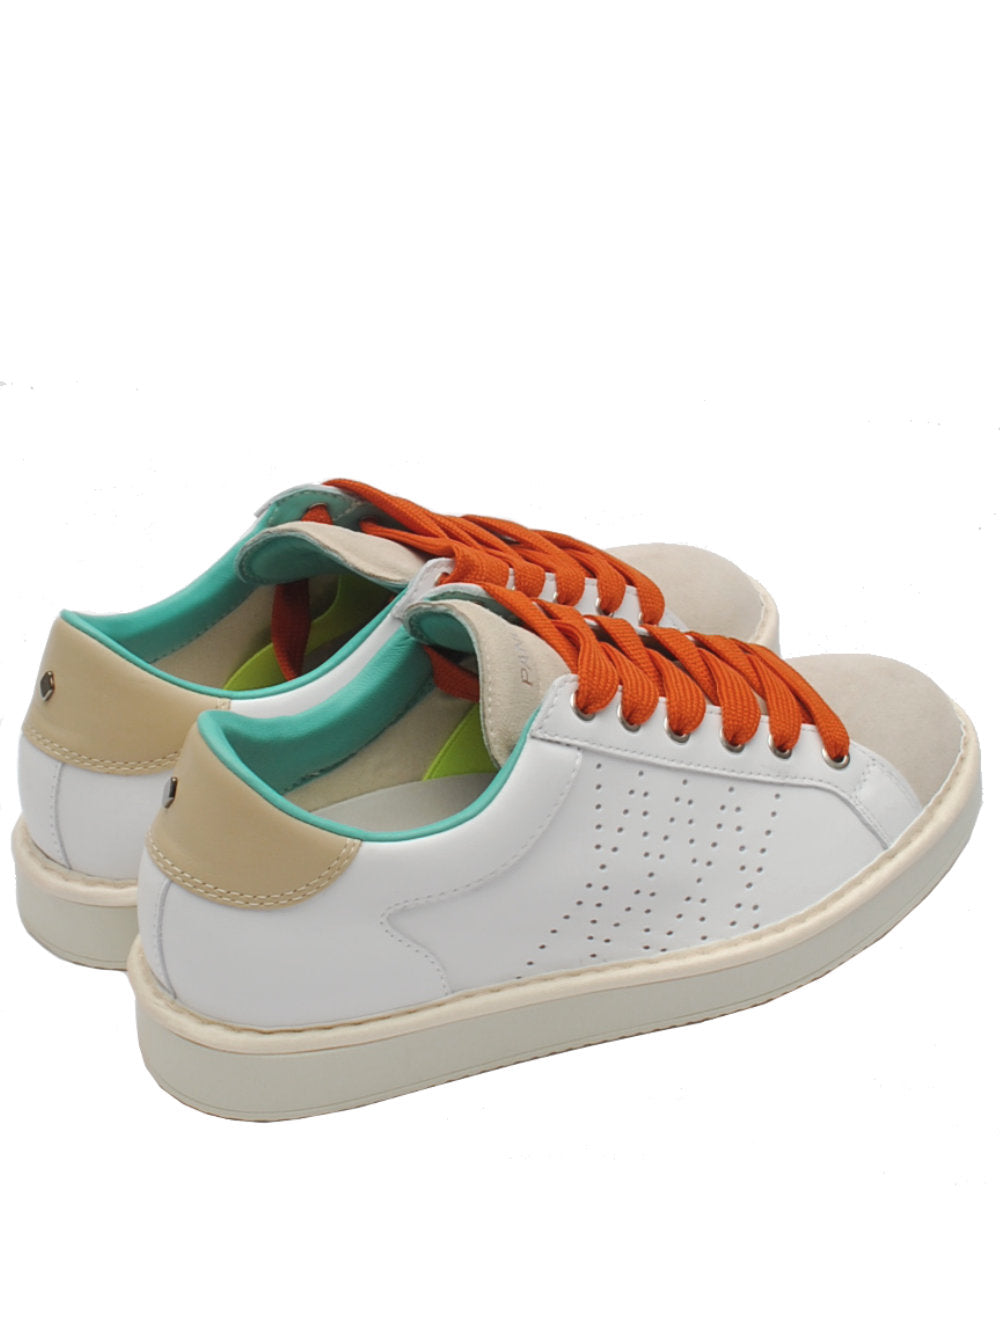 Panchic sneaker bianco nebbia arancione p01m013 pe24